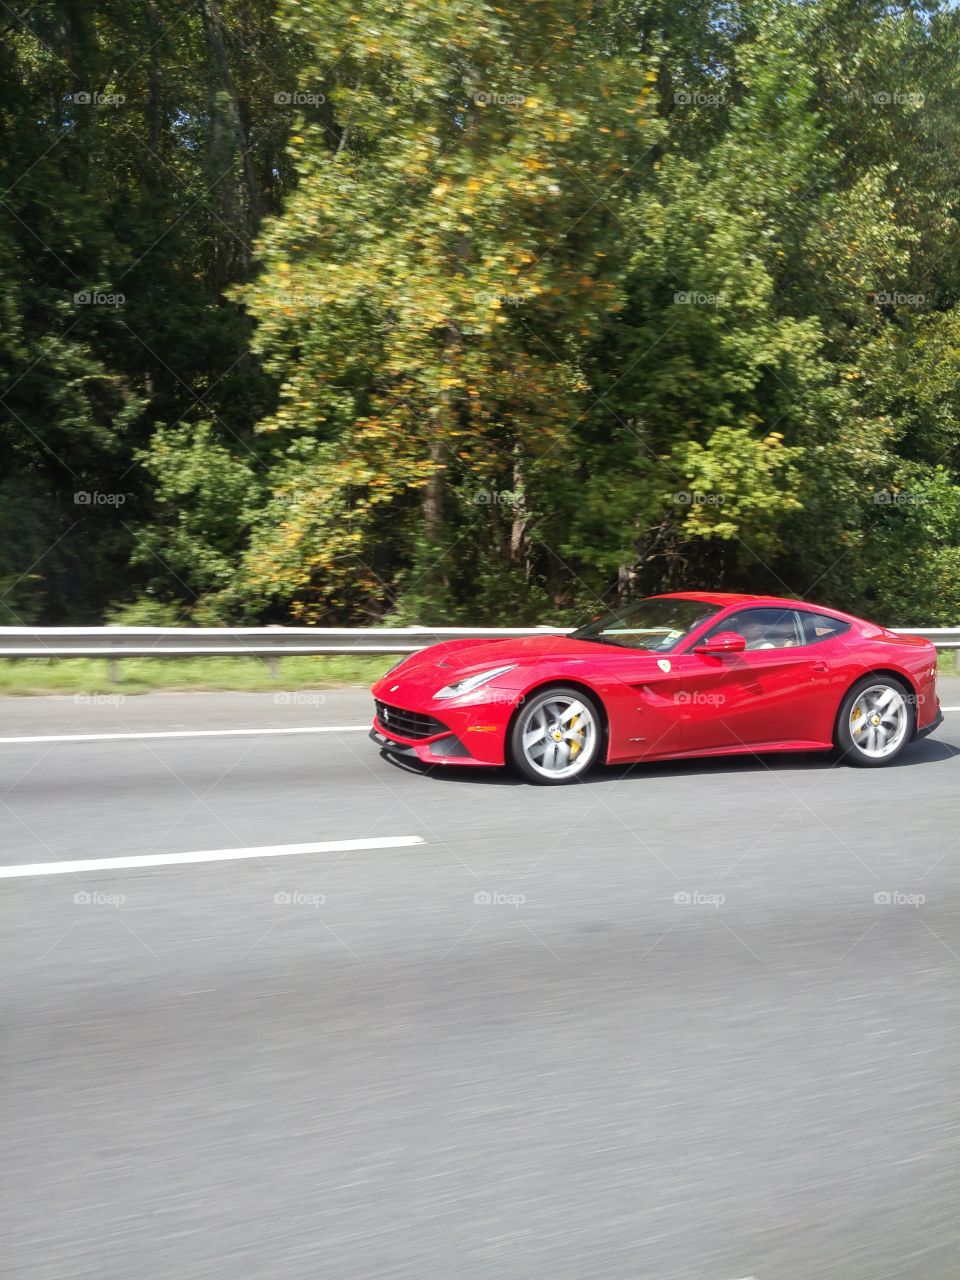 Ferrari Berlinetta?